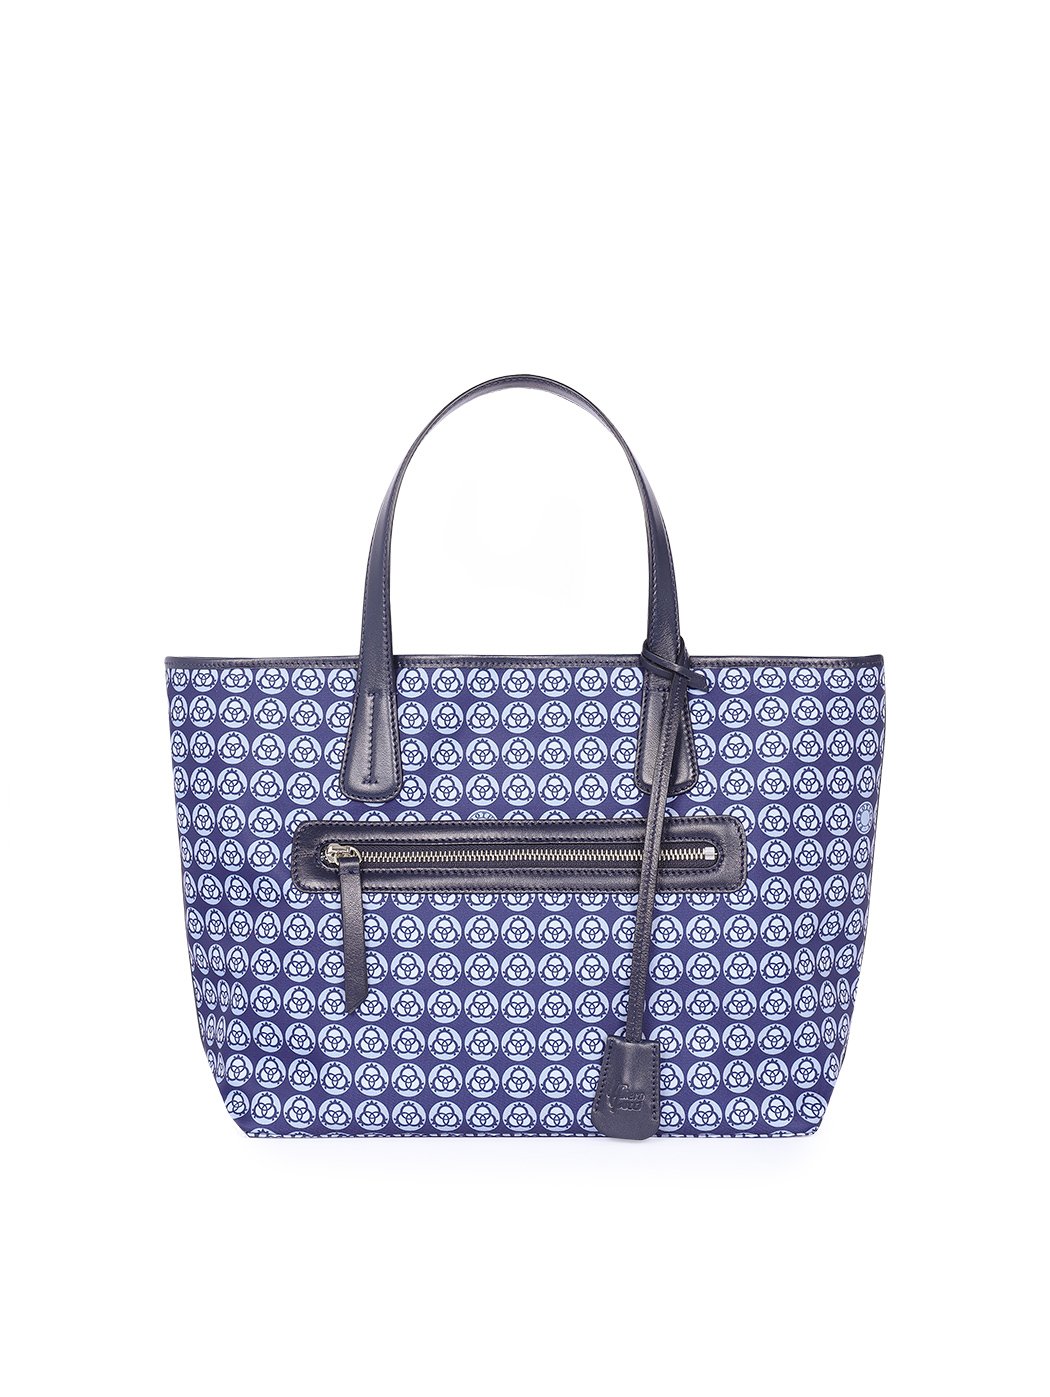 Nylon and leather Tote Handbag Blue